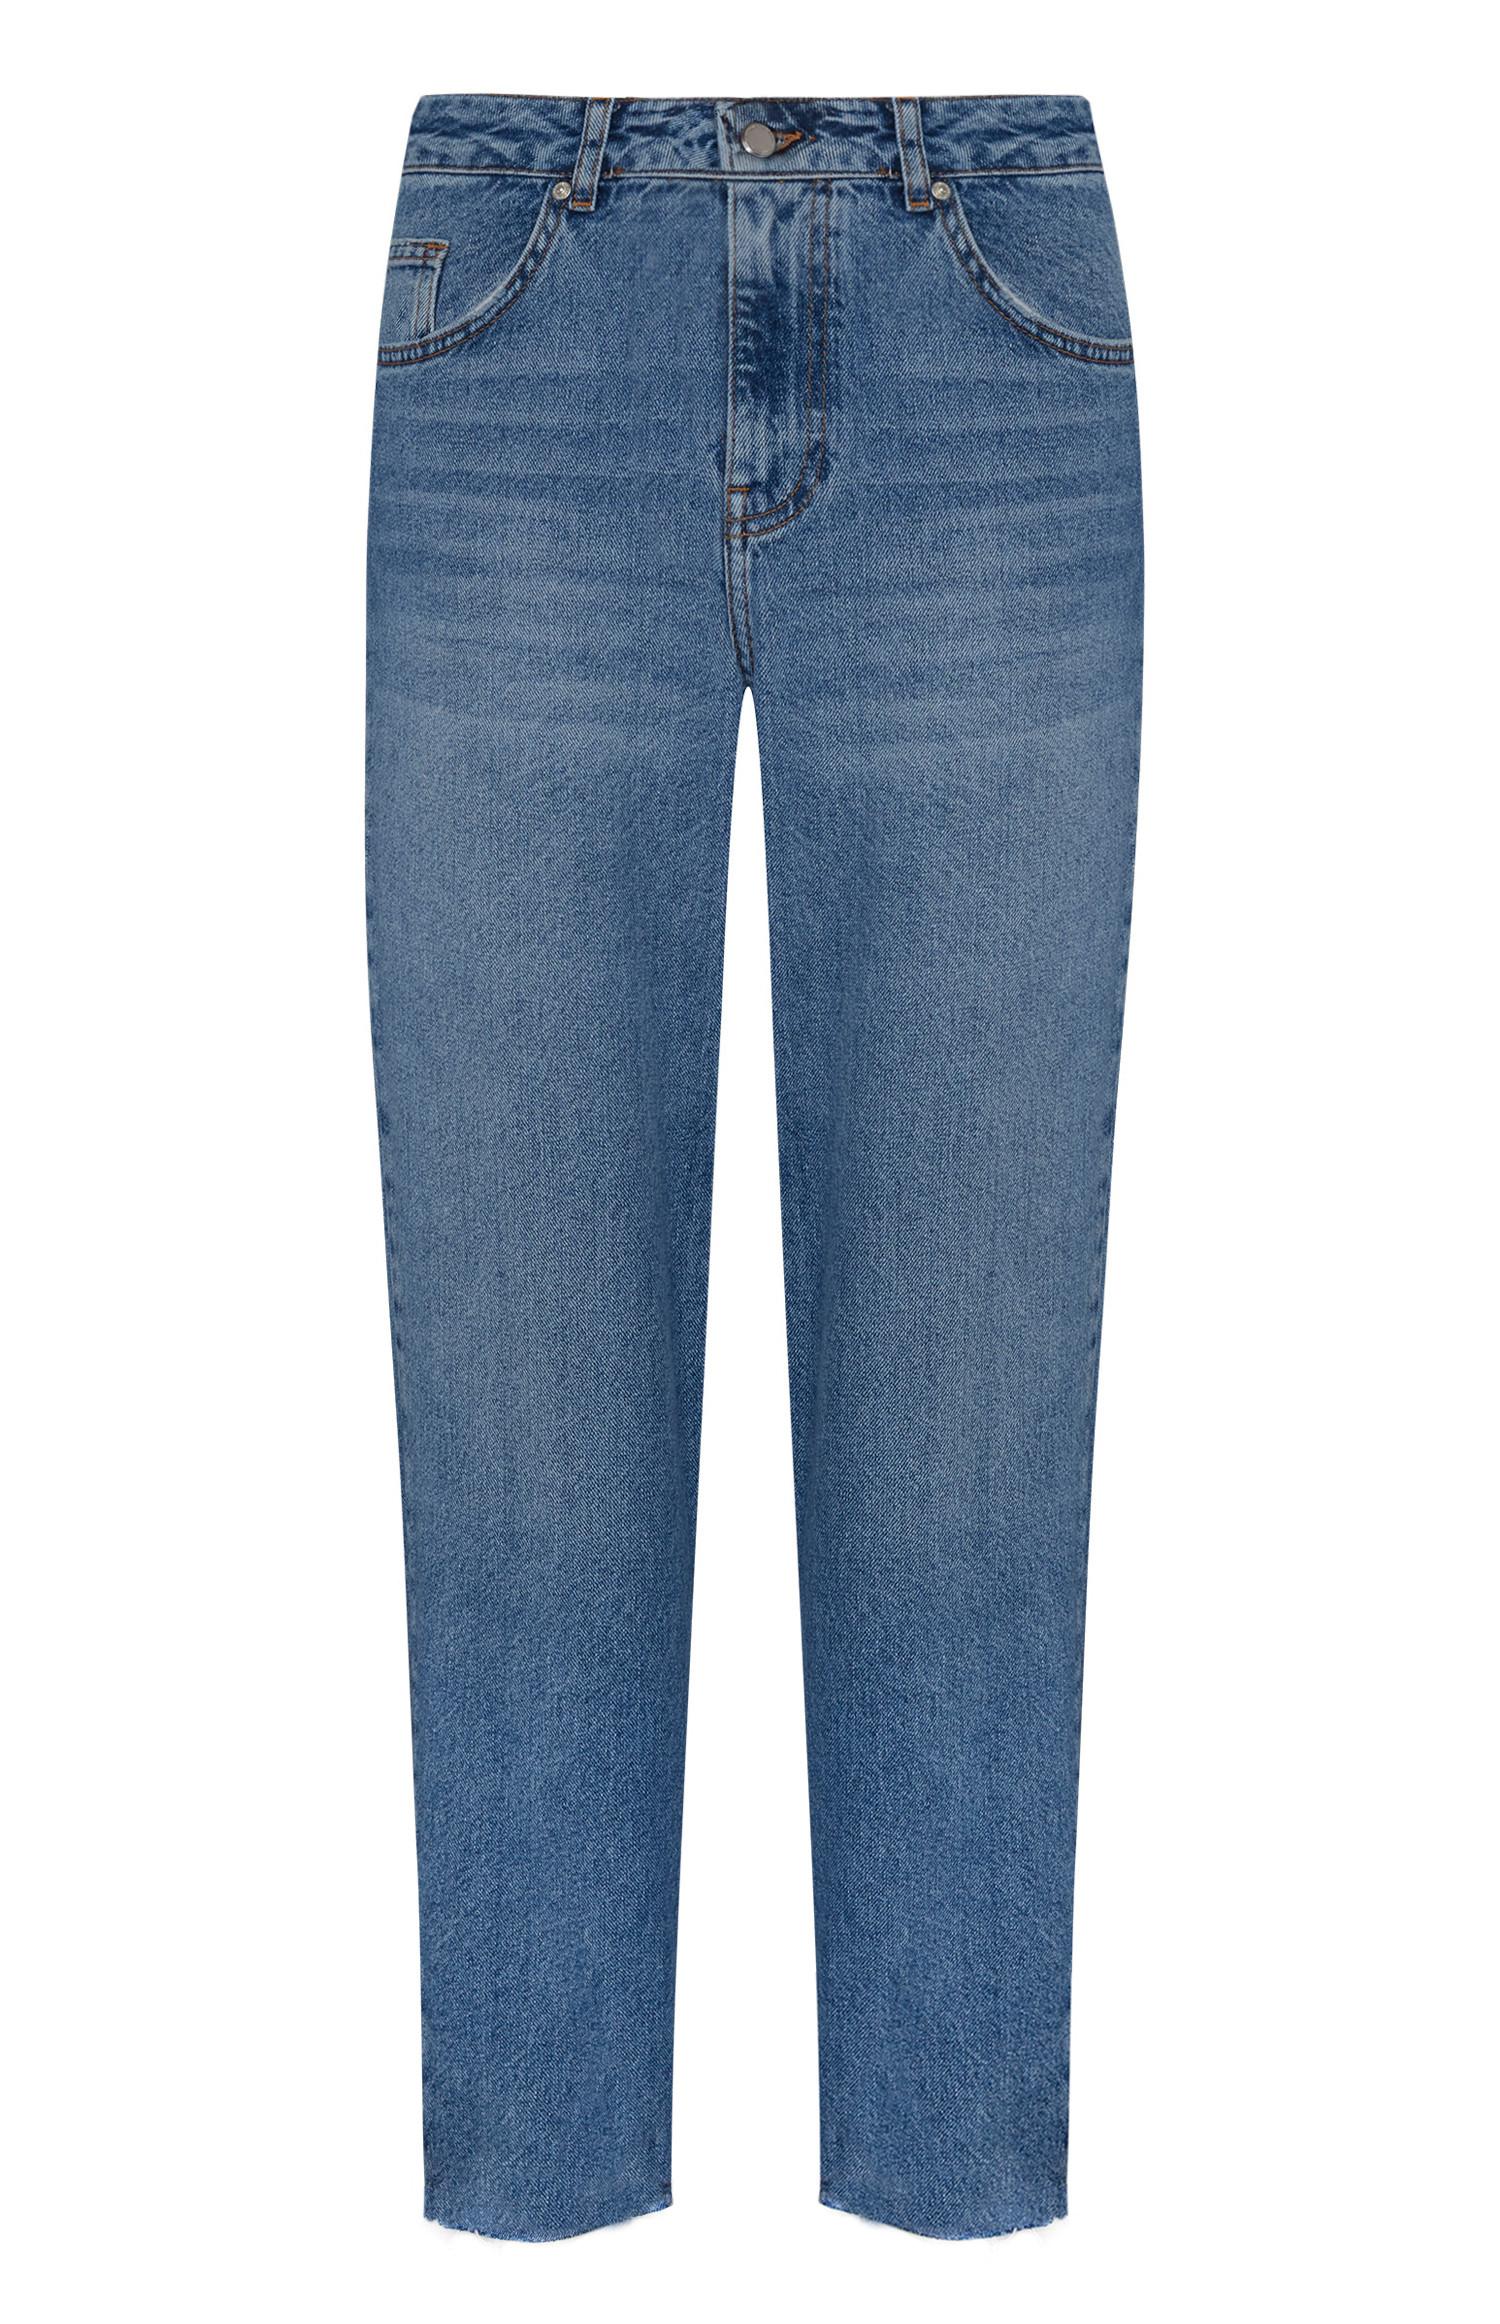 gloria vanderbilt jeans styles